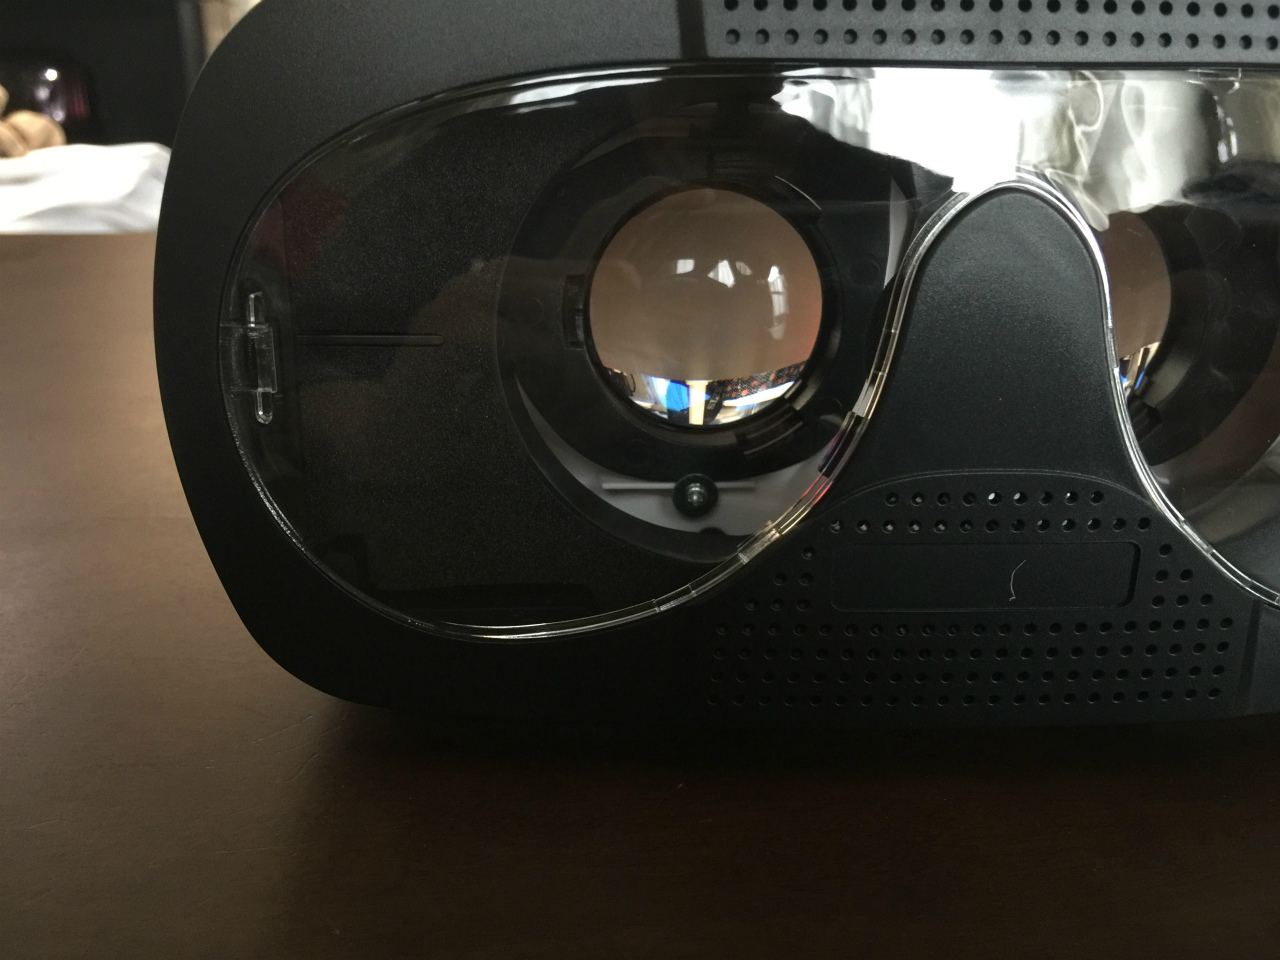 1213-201604_SoundSOUL 3D VR Glass G3 06